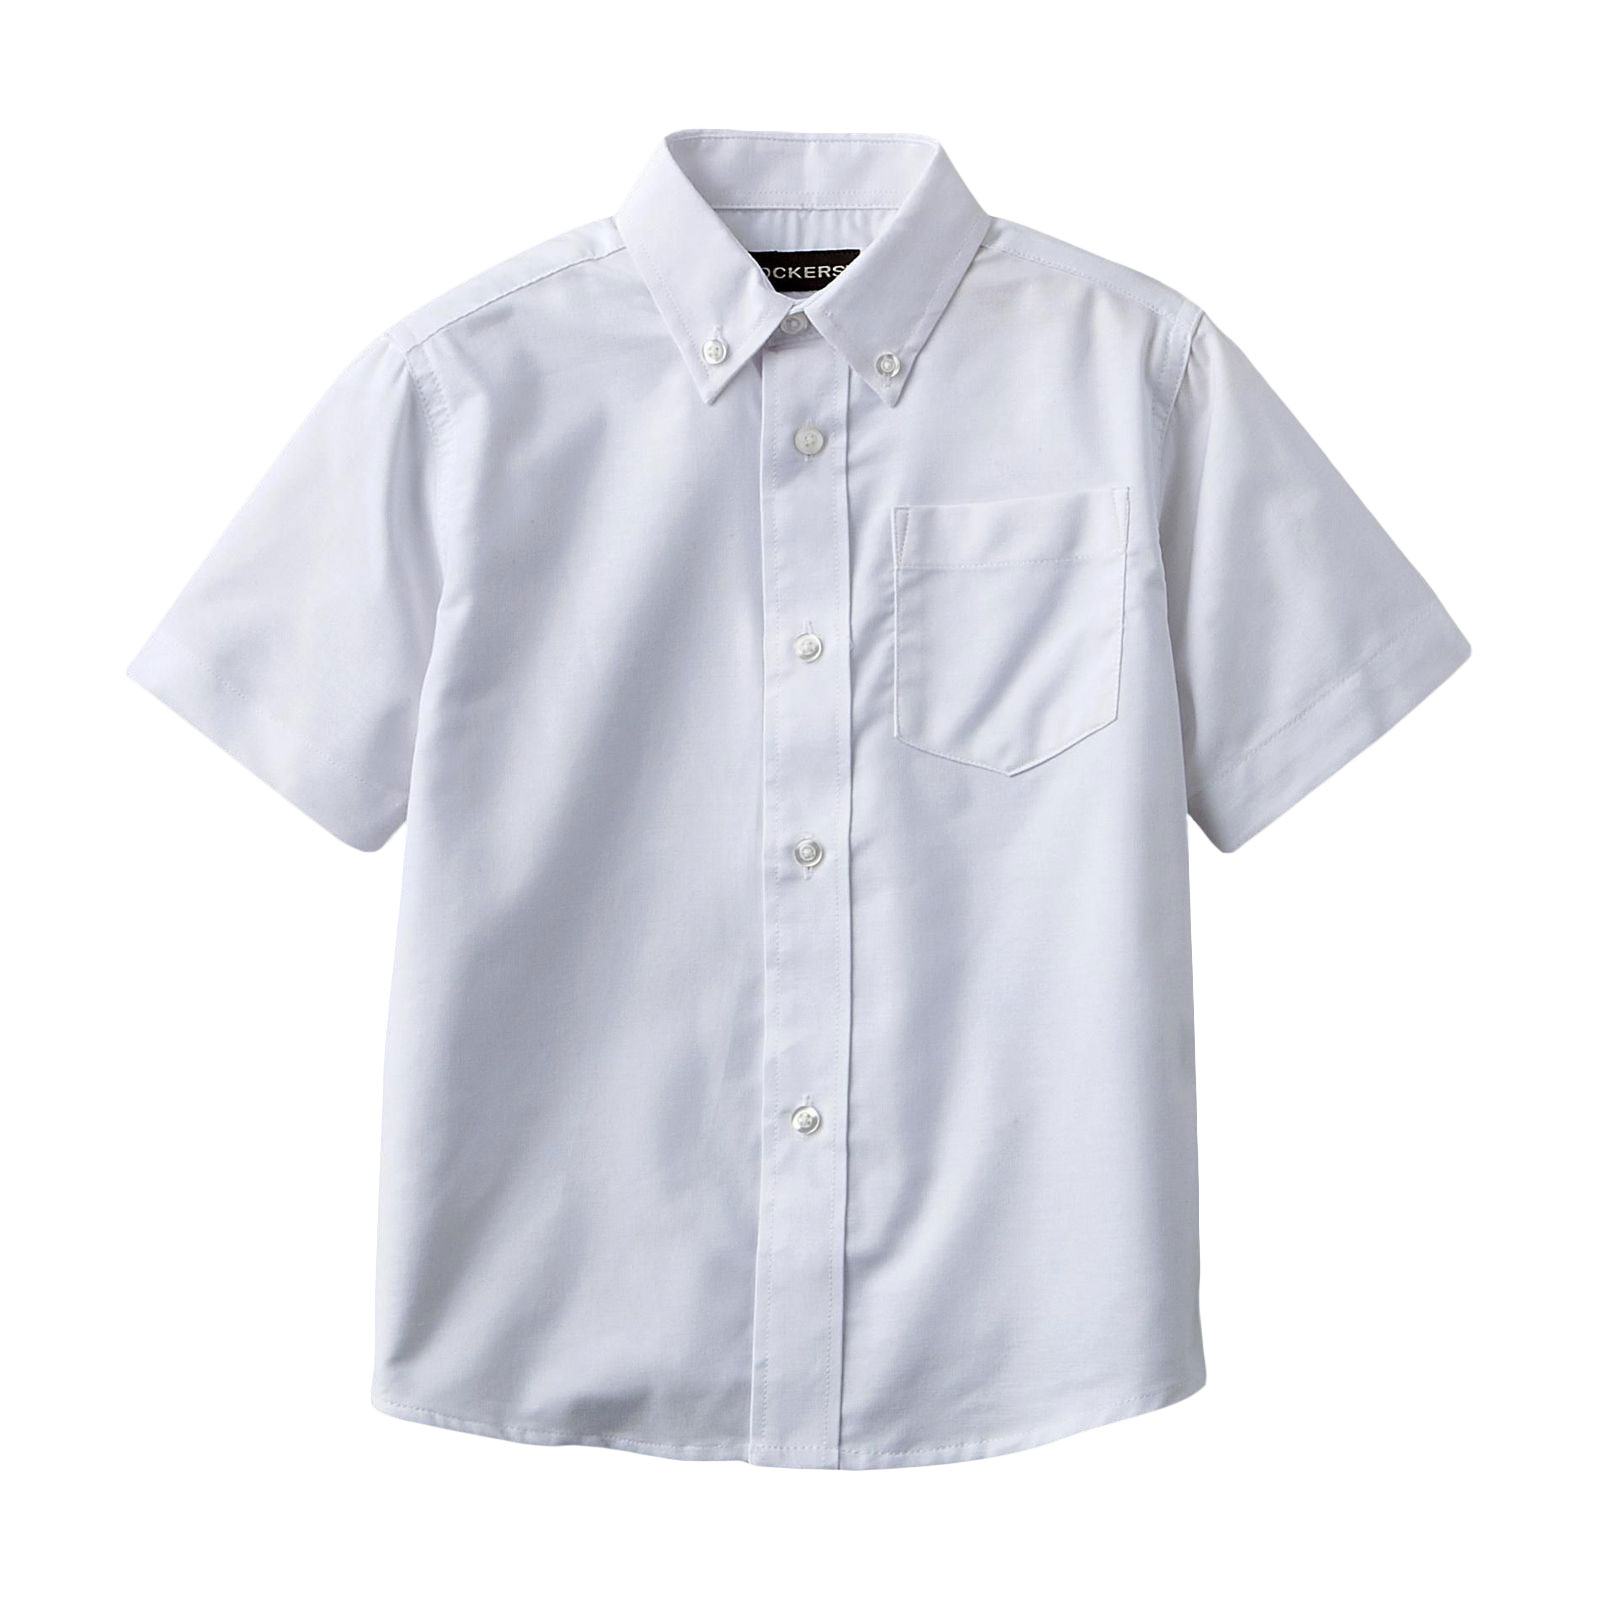 Dockers Boy's Short Sleeve Oxford Dress Shirt